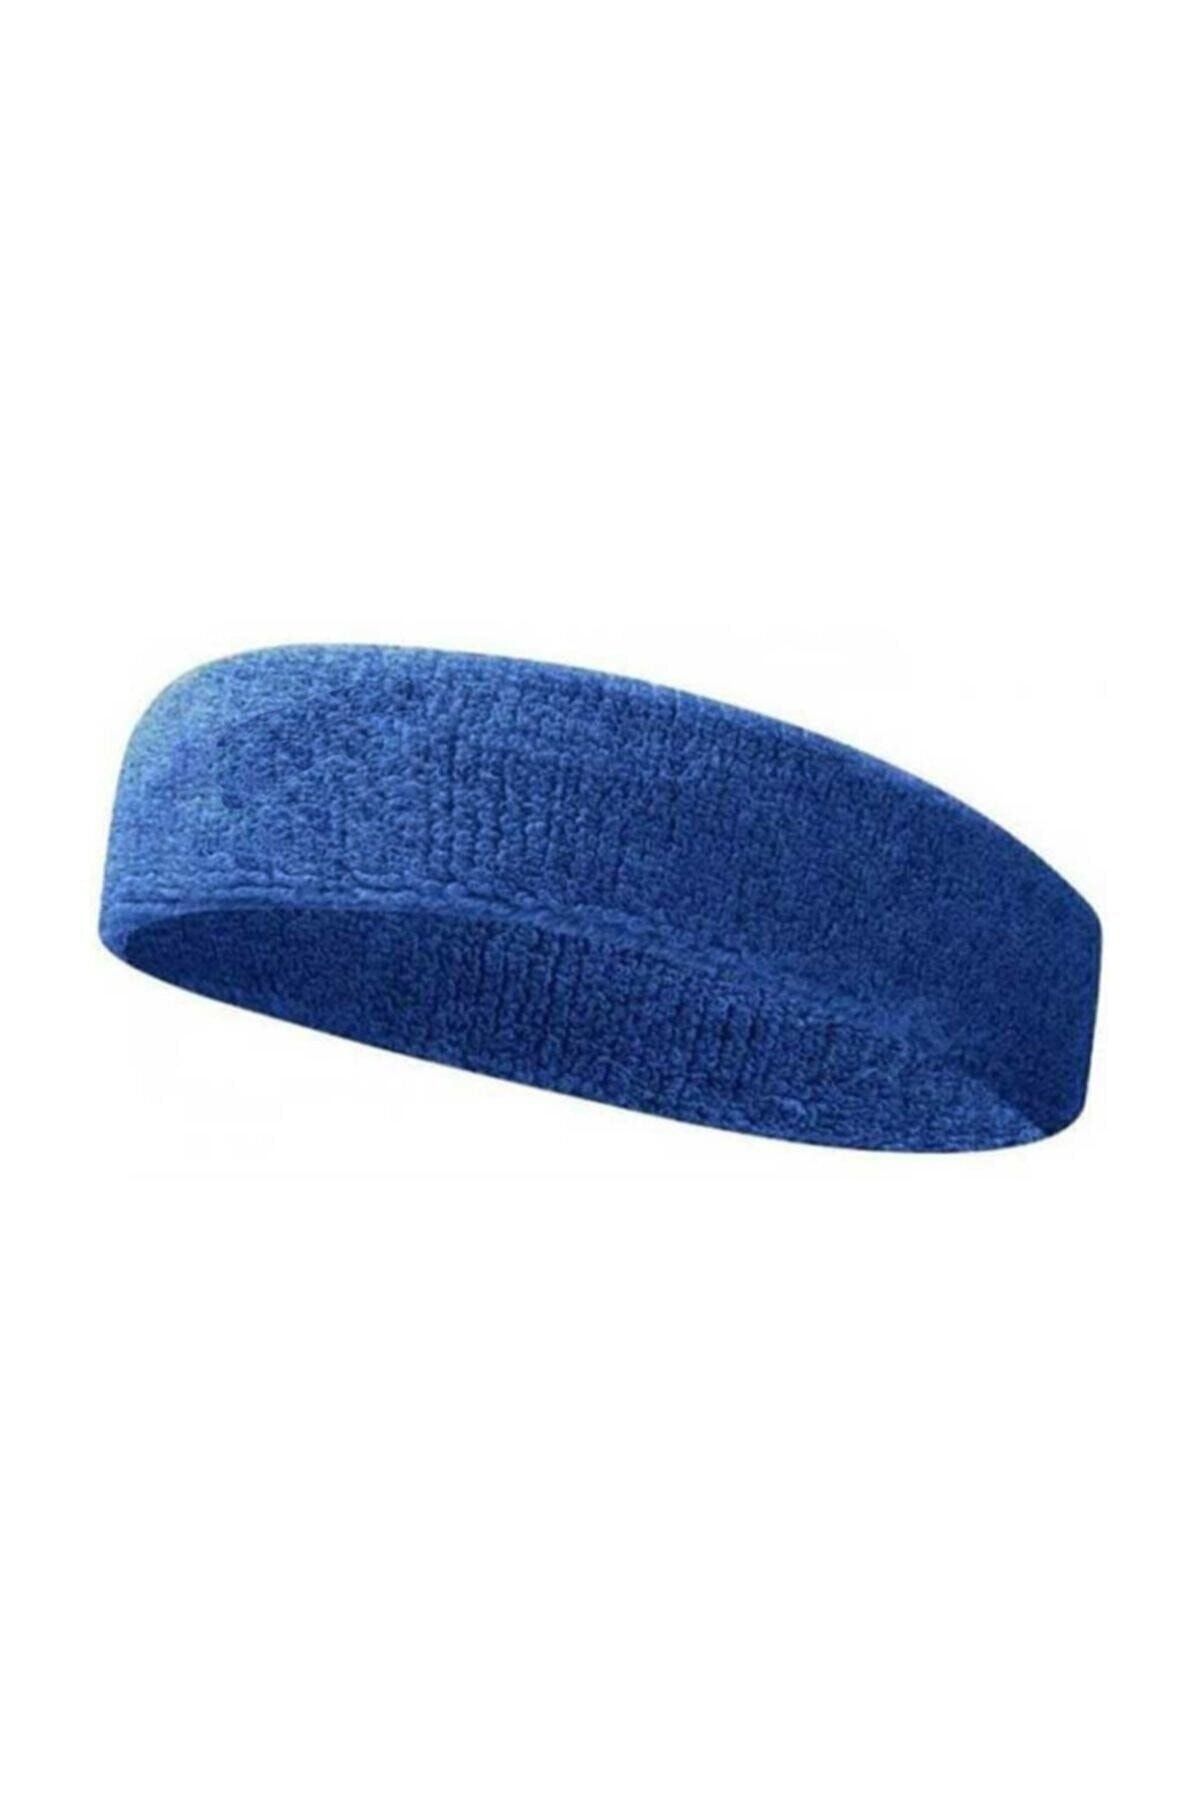 REDZEUS Sporcu Havlu Kafa  Alın Ter Bandı Headband Mavi